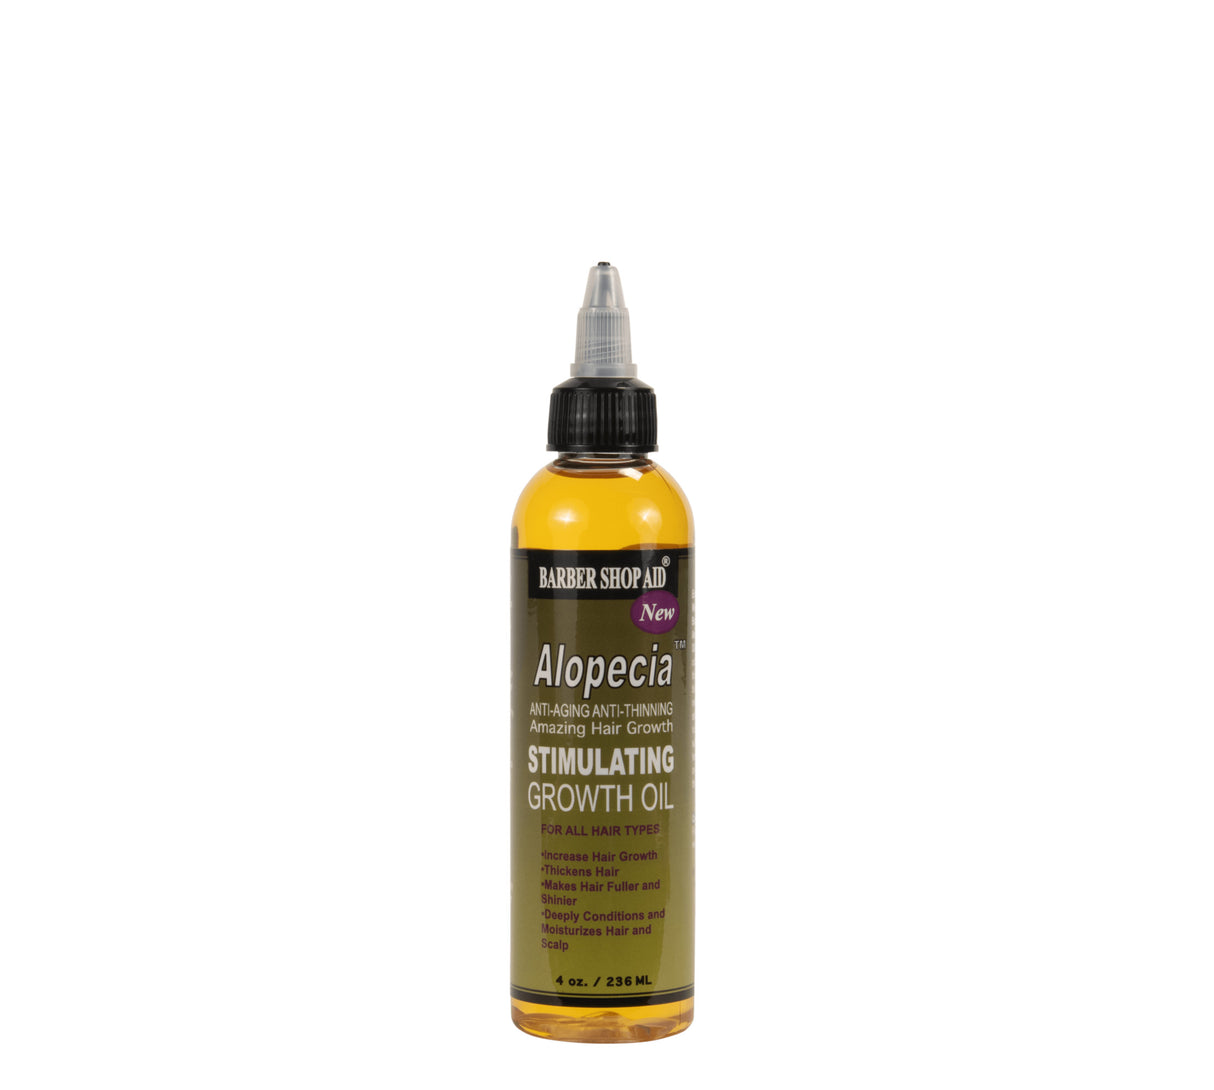 Barbershop Aid® Alopecia Anti-Thinning Anti-Aging Amazing Hair Growth Oil (4 oz)